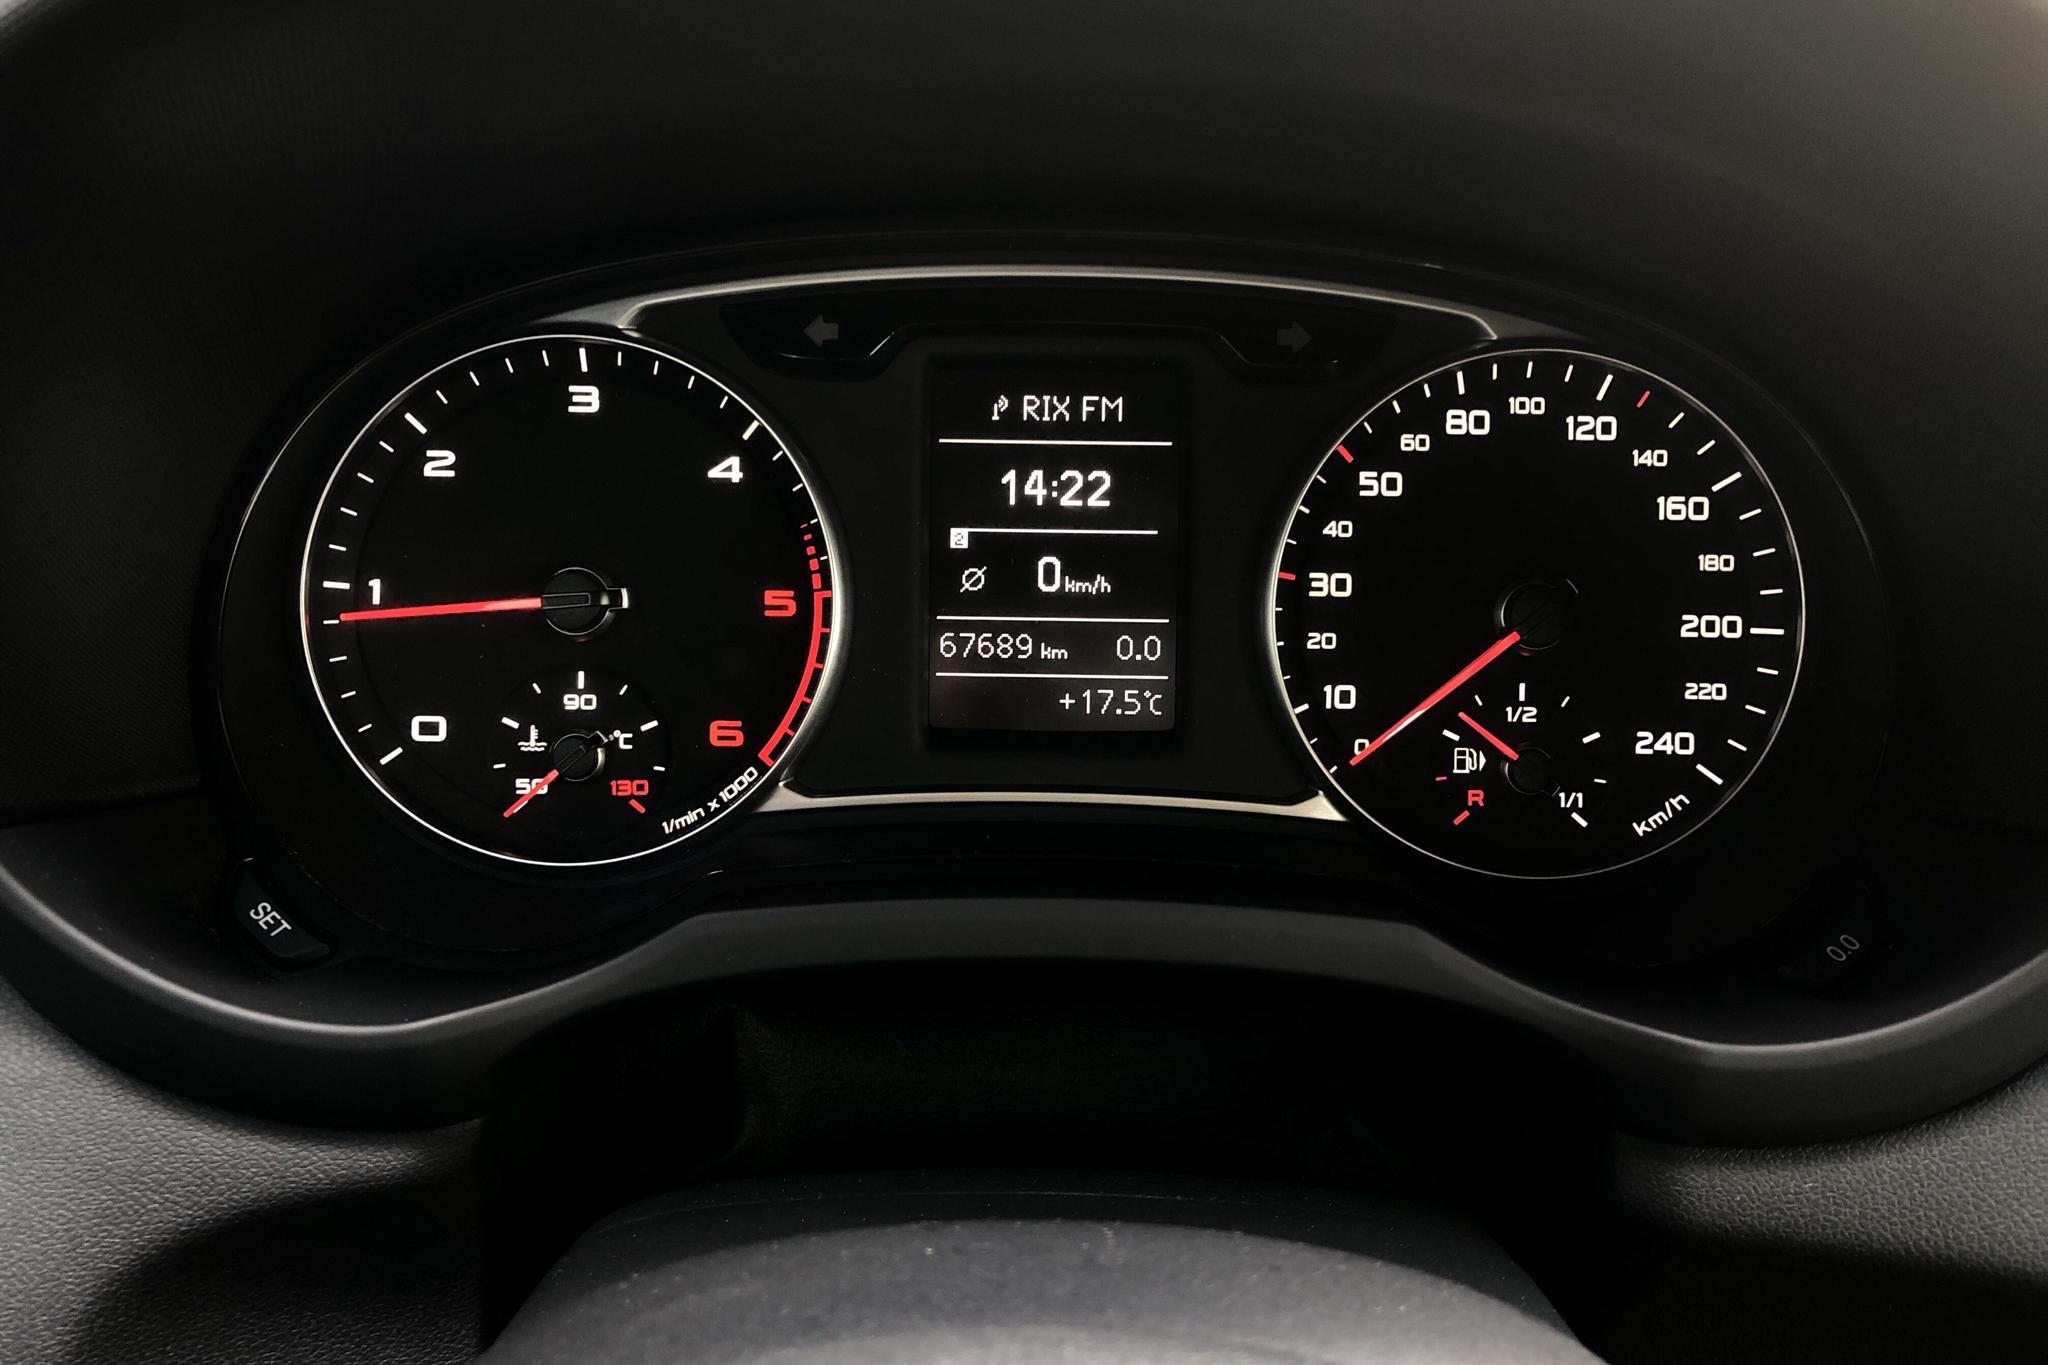 Audi A1 1.6 TDI (105hk) - 67 690 km - Manual - red - 2011